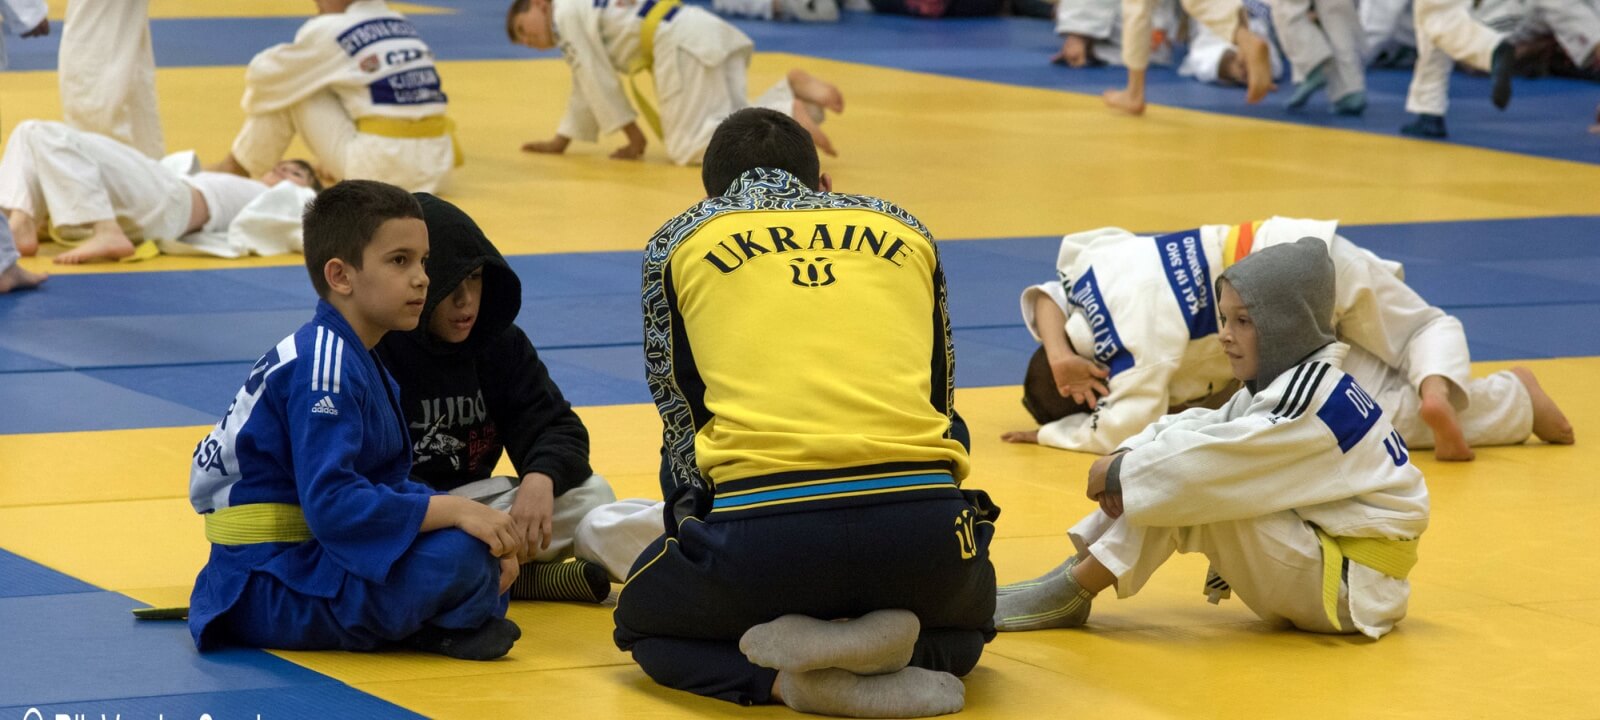 Int. Judo Tournament Venray